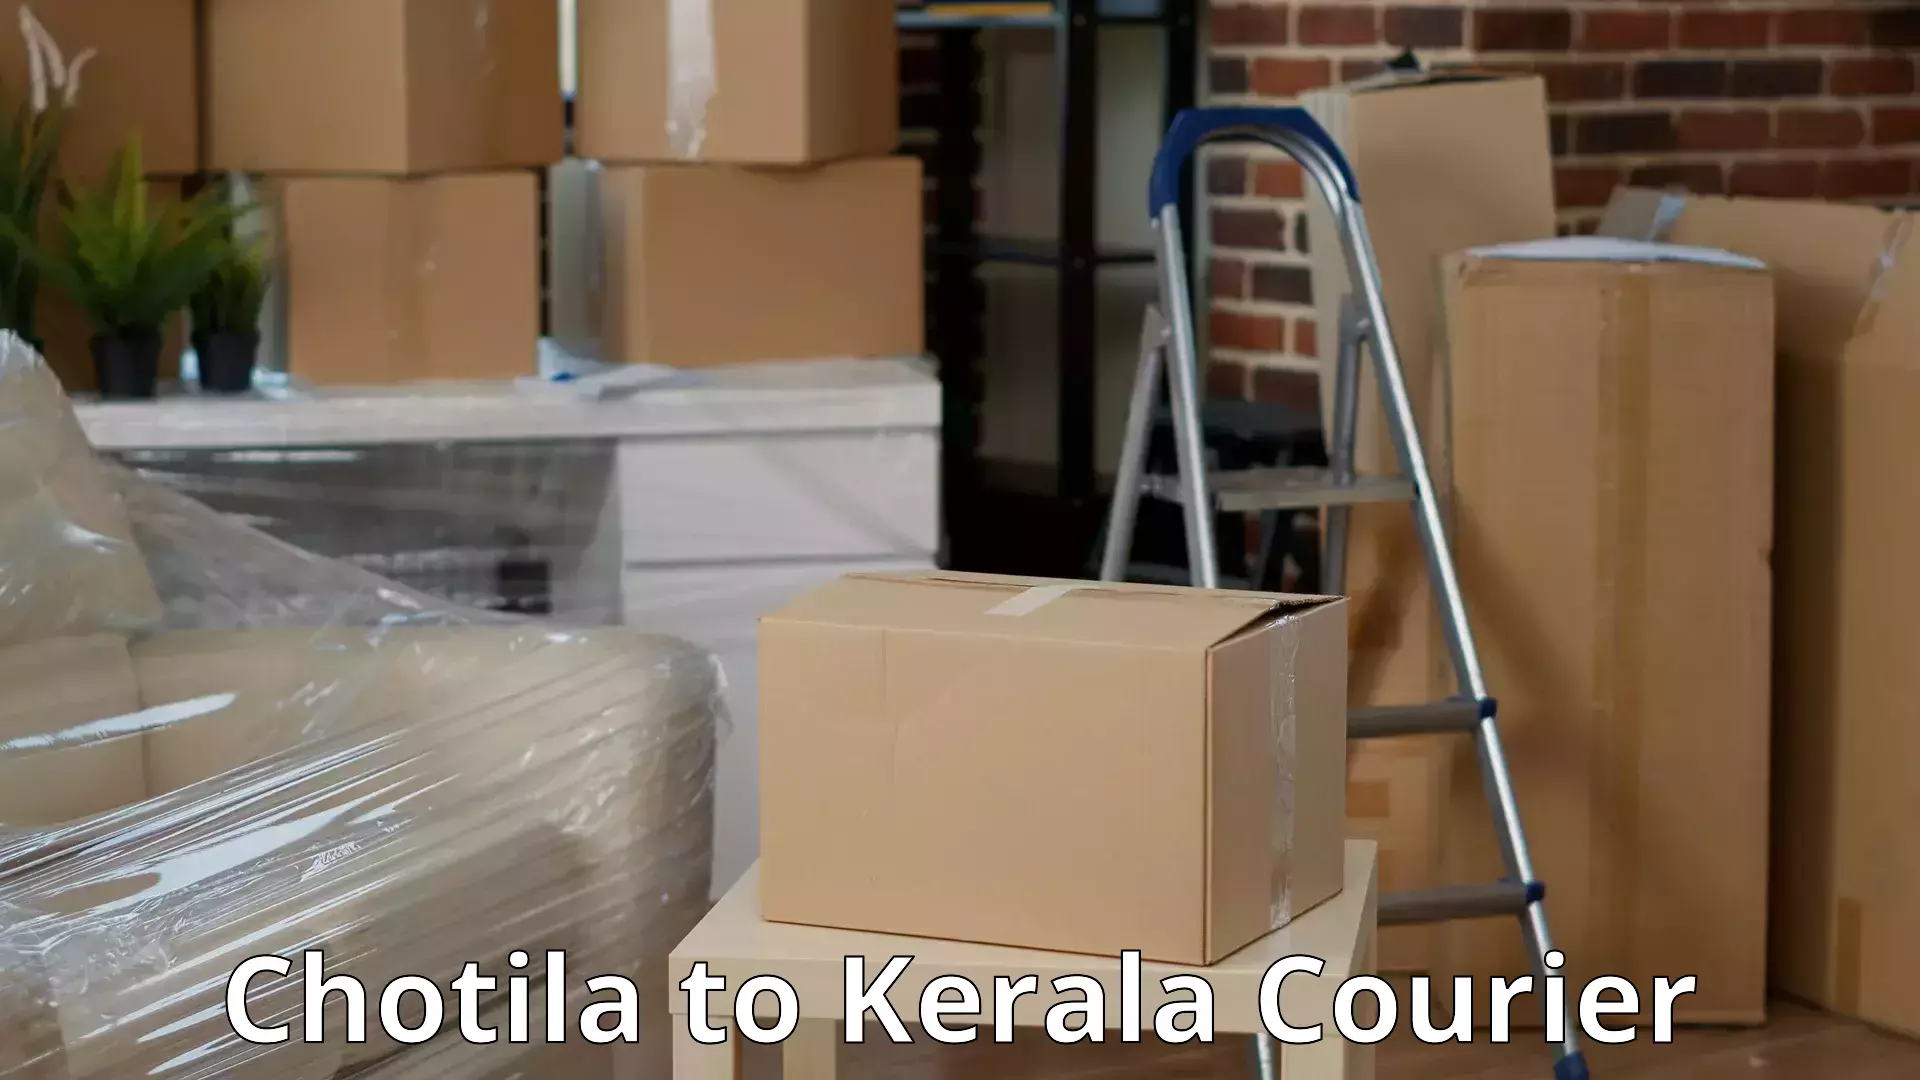 Quality moving and storage Chotila to Kerala